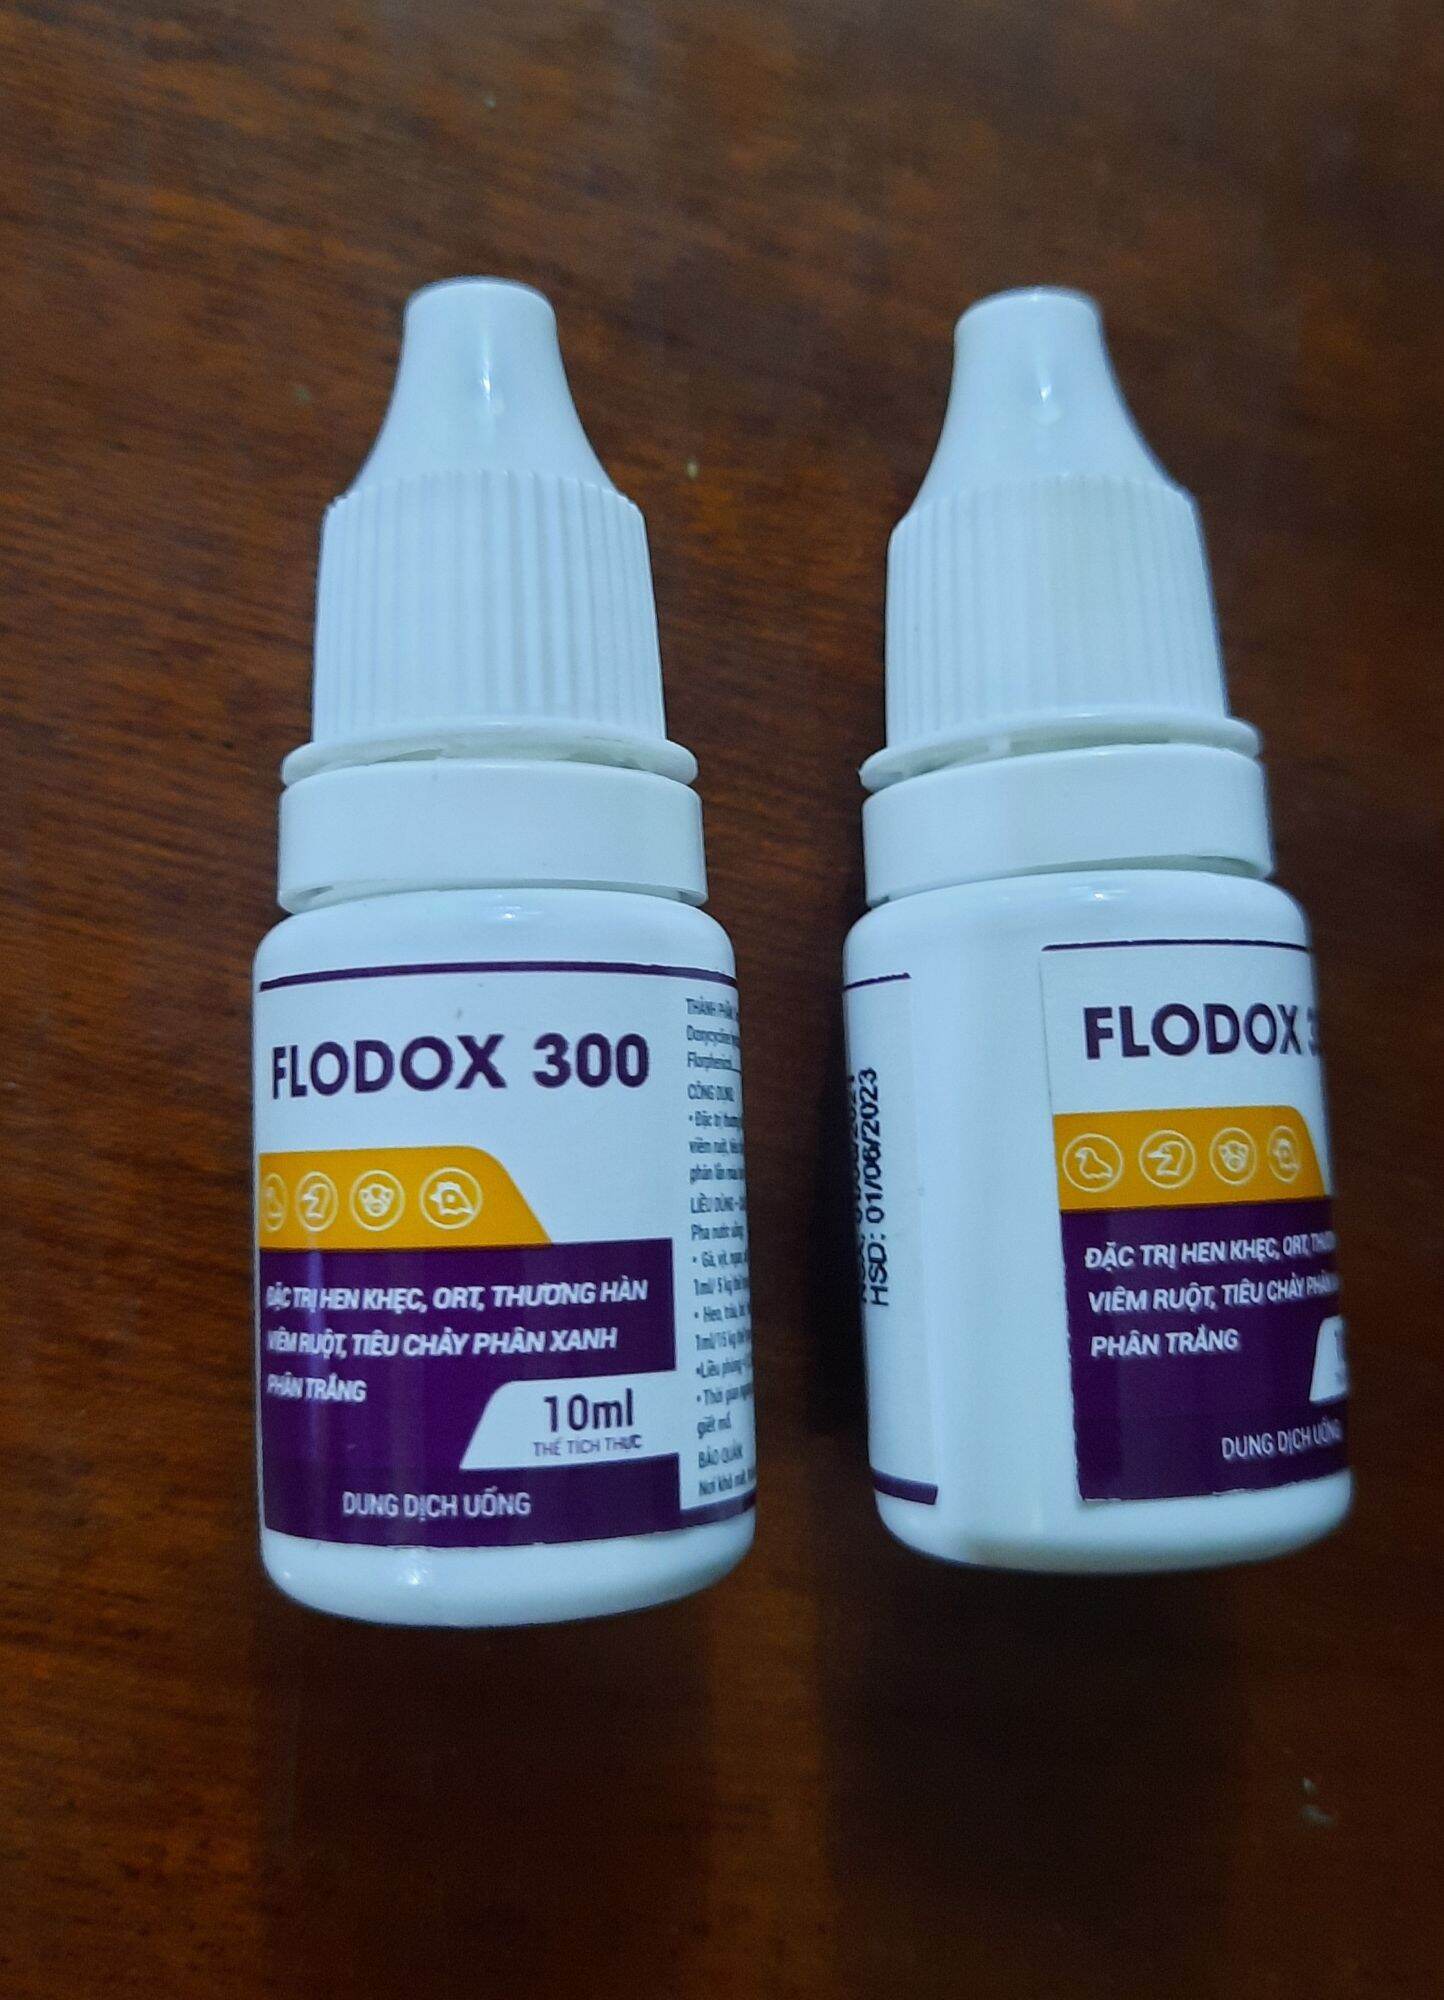 Flodox 300